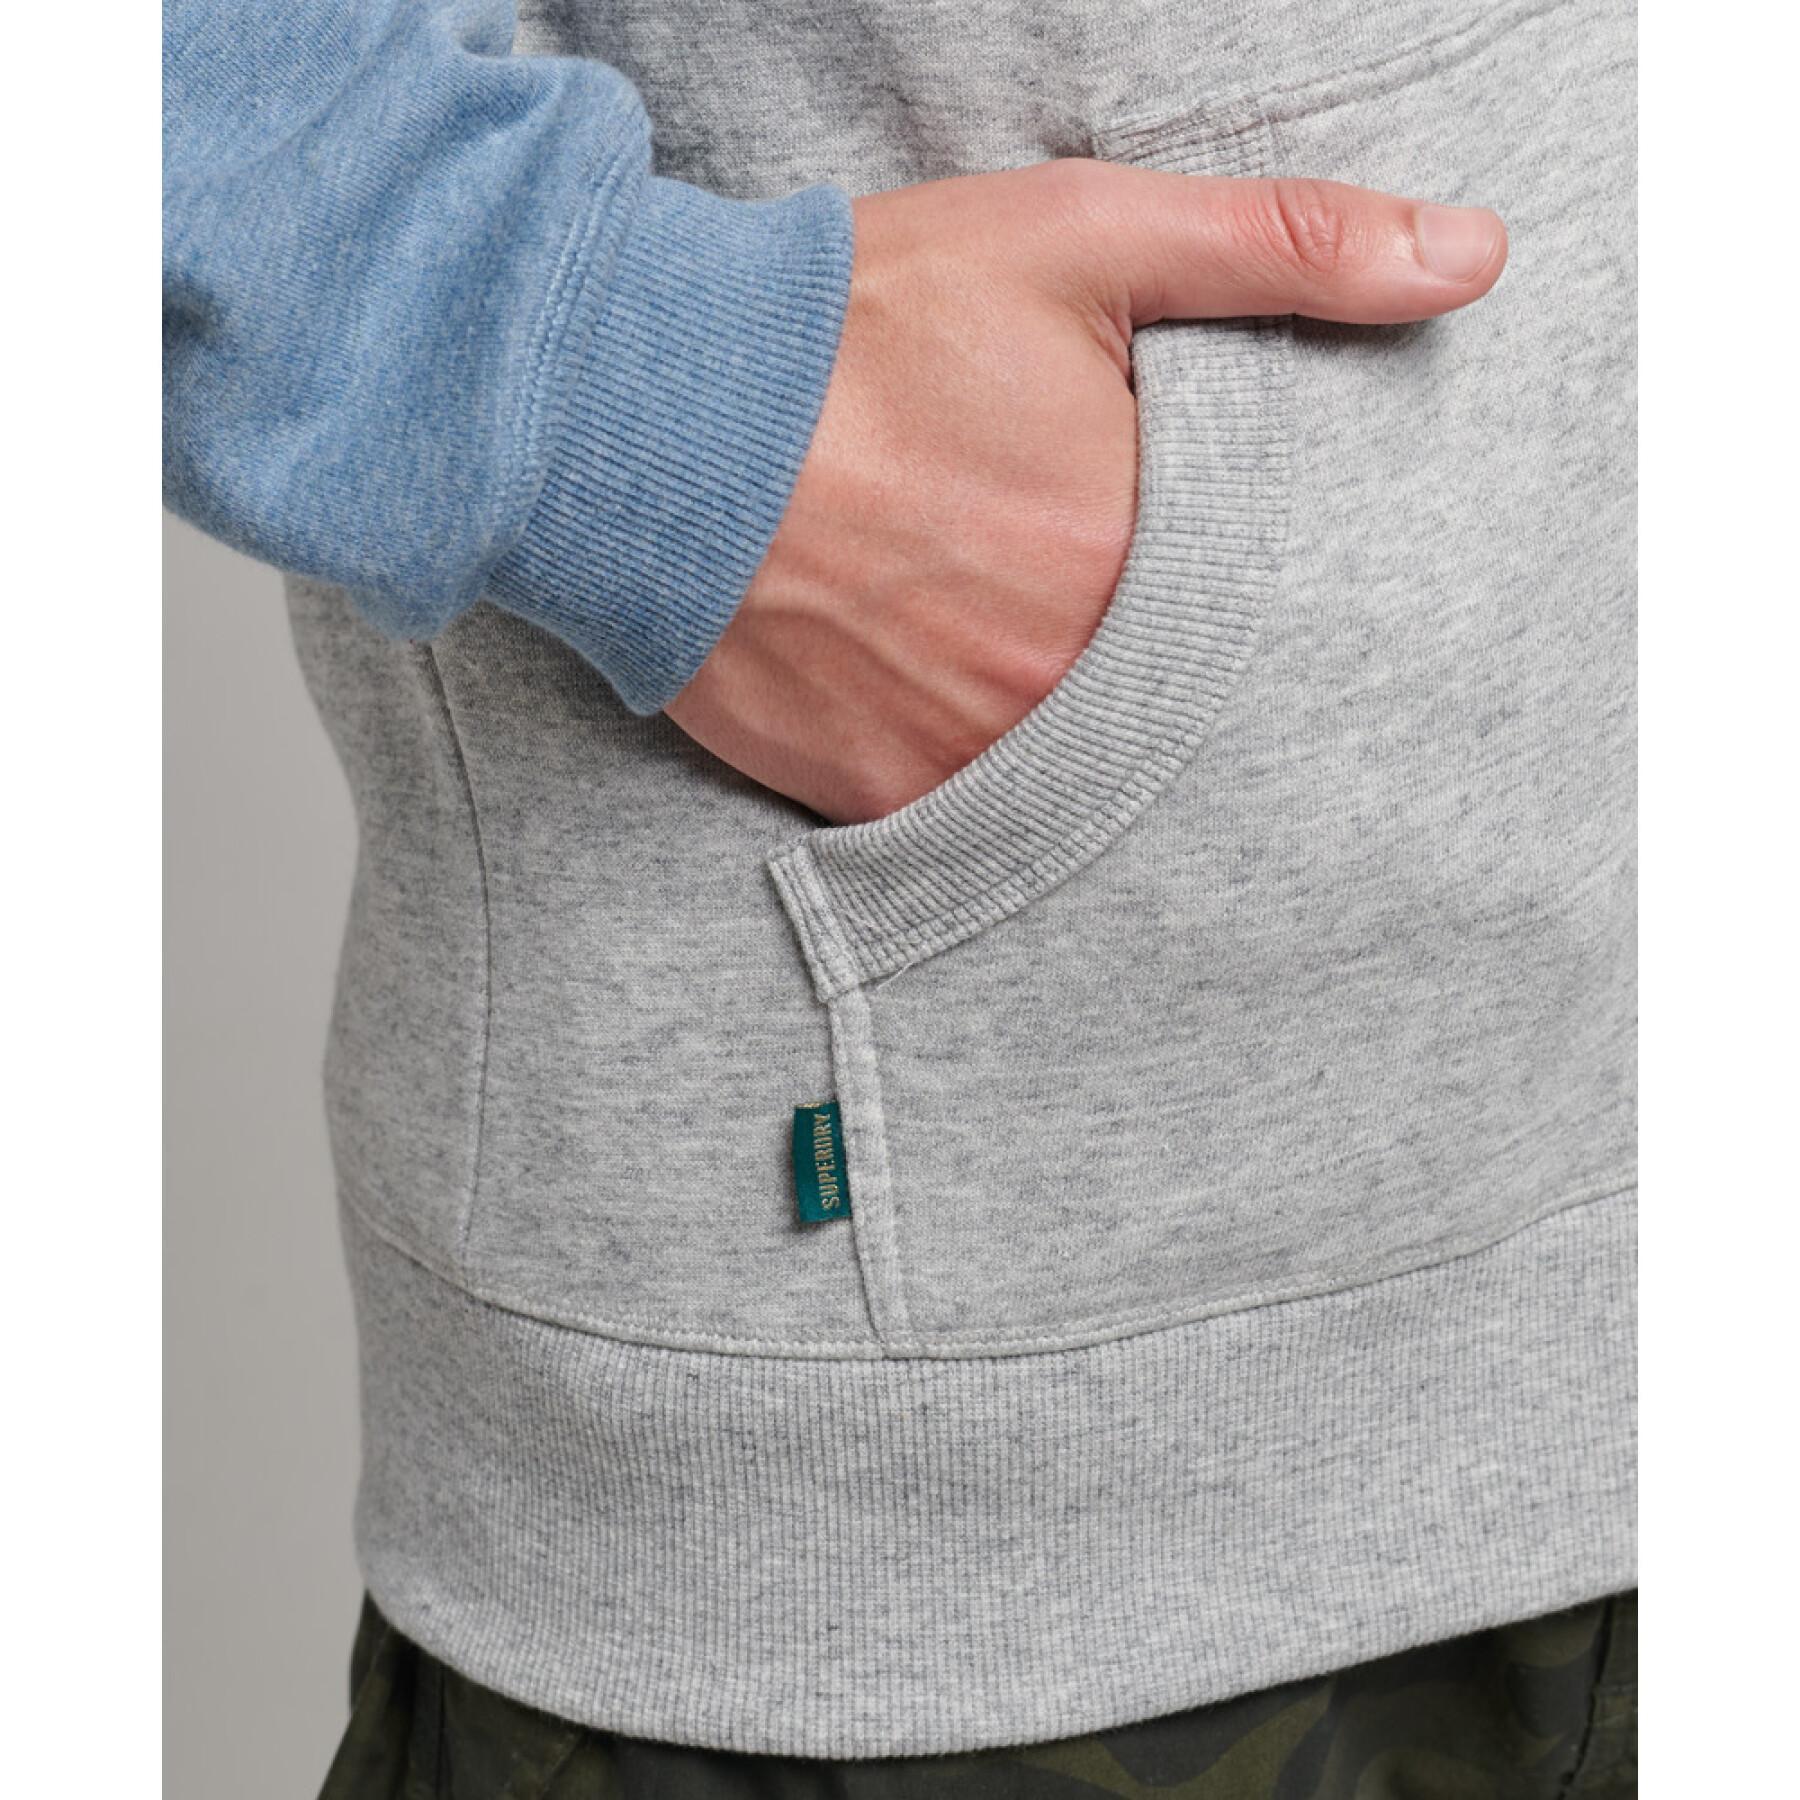 Hooded sweatshirt with zipper, baseball style, organic cotton Superdry Vintage Logo